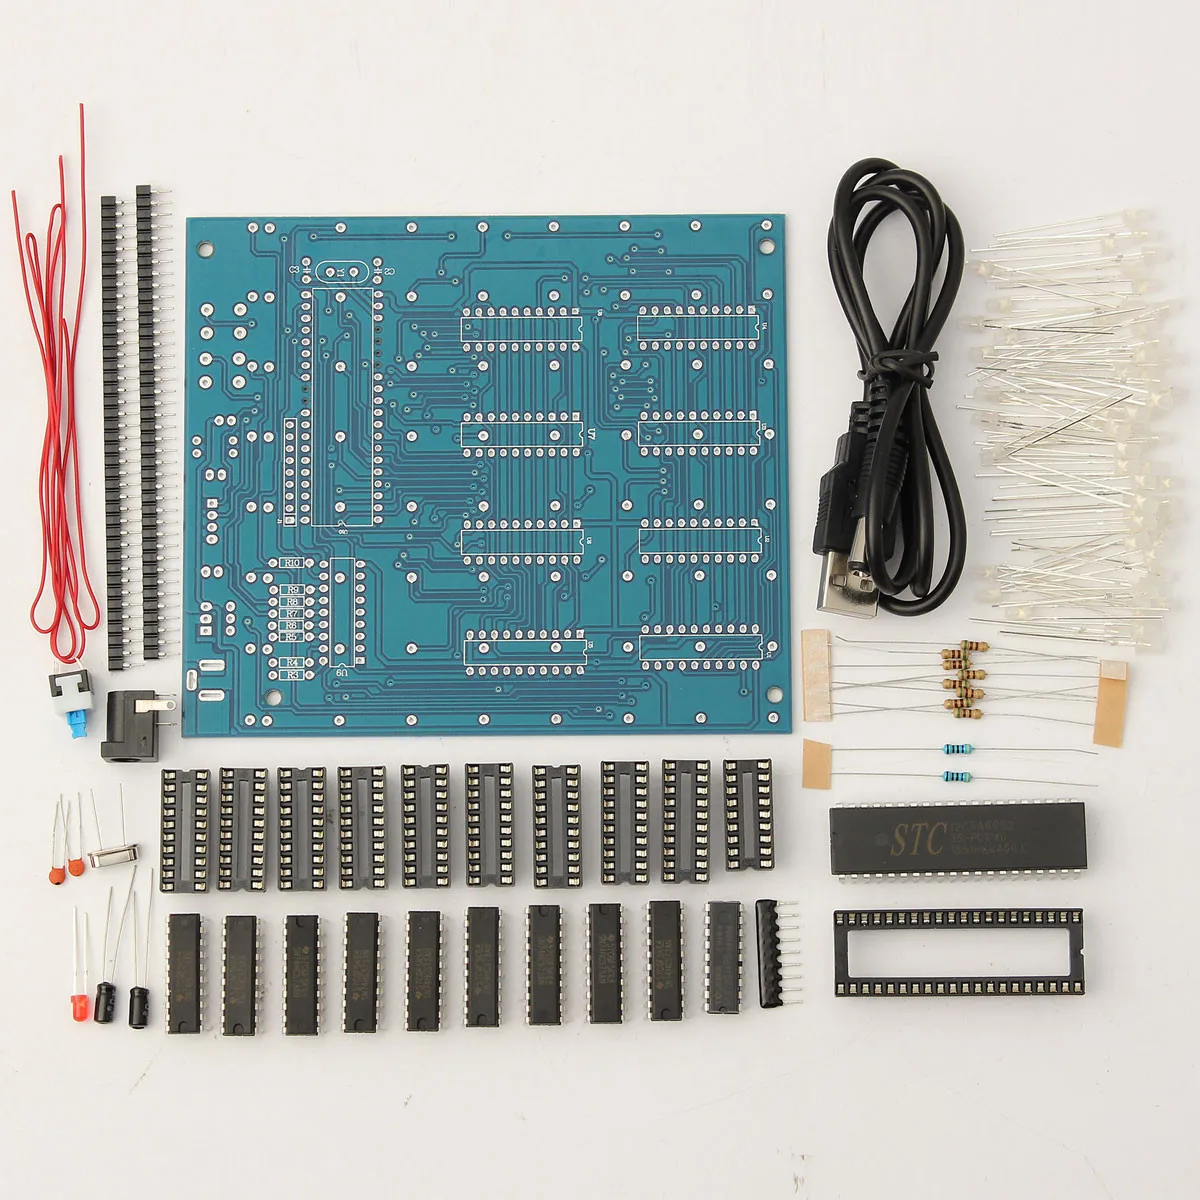 ARILUX 8x8x8 512 светодиодный s Синий светодиодный светильник Cube Kit 3D светодиодный DIY Kit электронный набор для Arduino Smart Electronics СВЕТОДИОДНЫЙ кубик DIY Kit